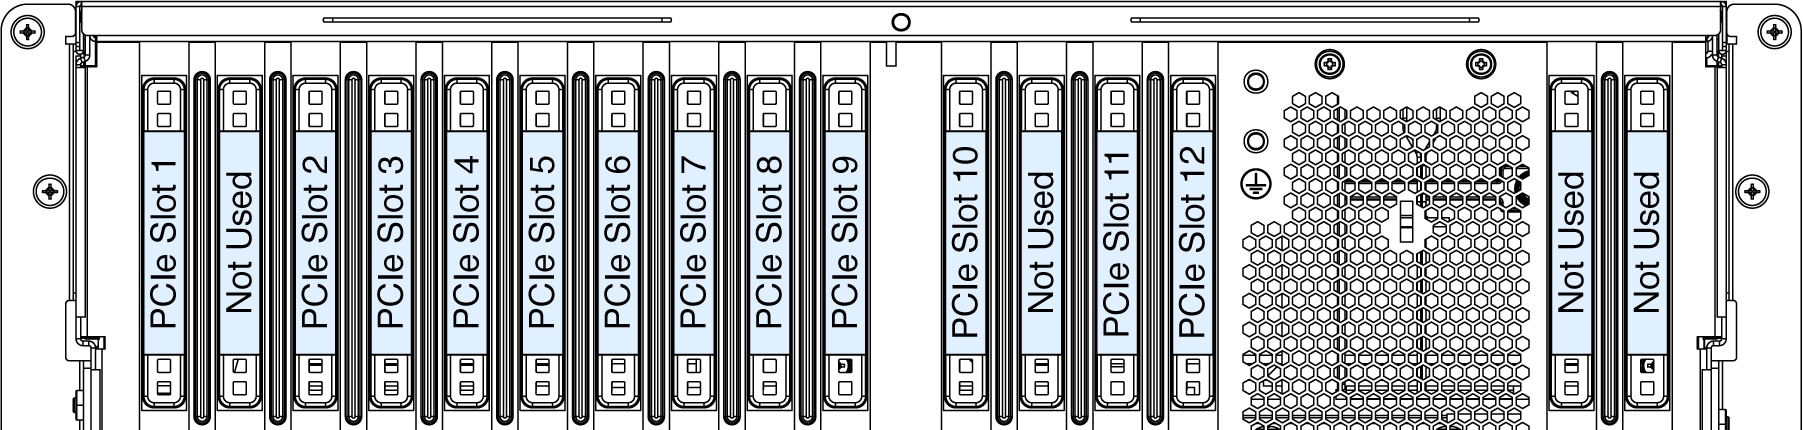 Figure 5: Rear panel slots of the 112-core appliance